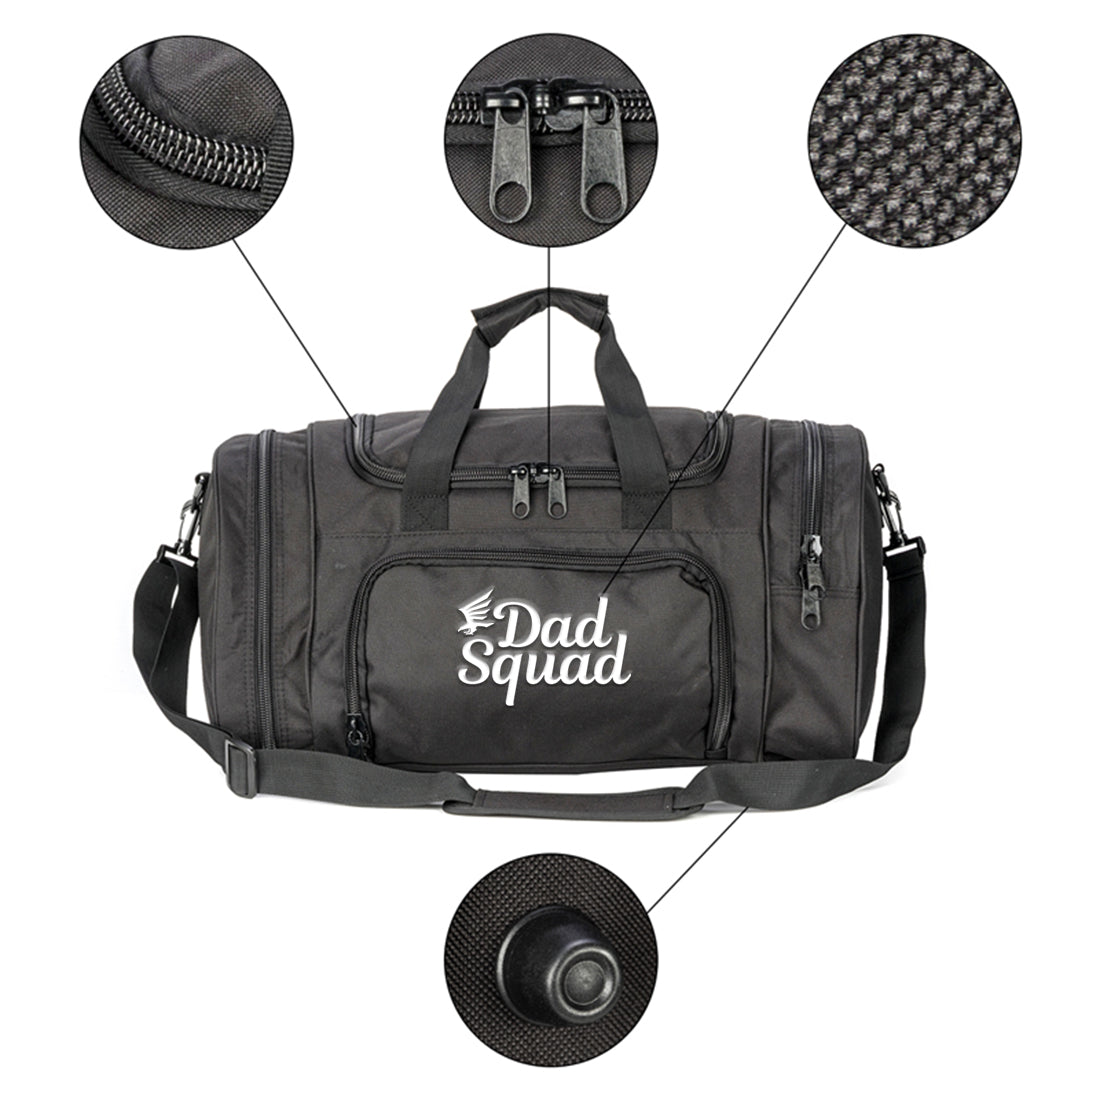 Dad Squad Heavy-Duty Tactical Duffel Bag - Black